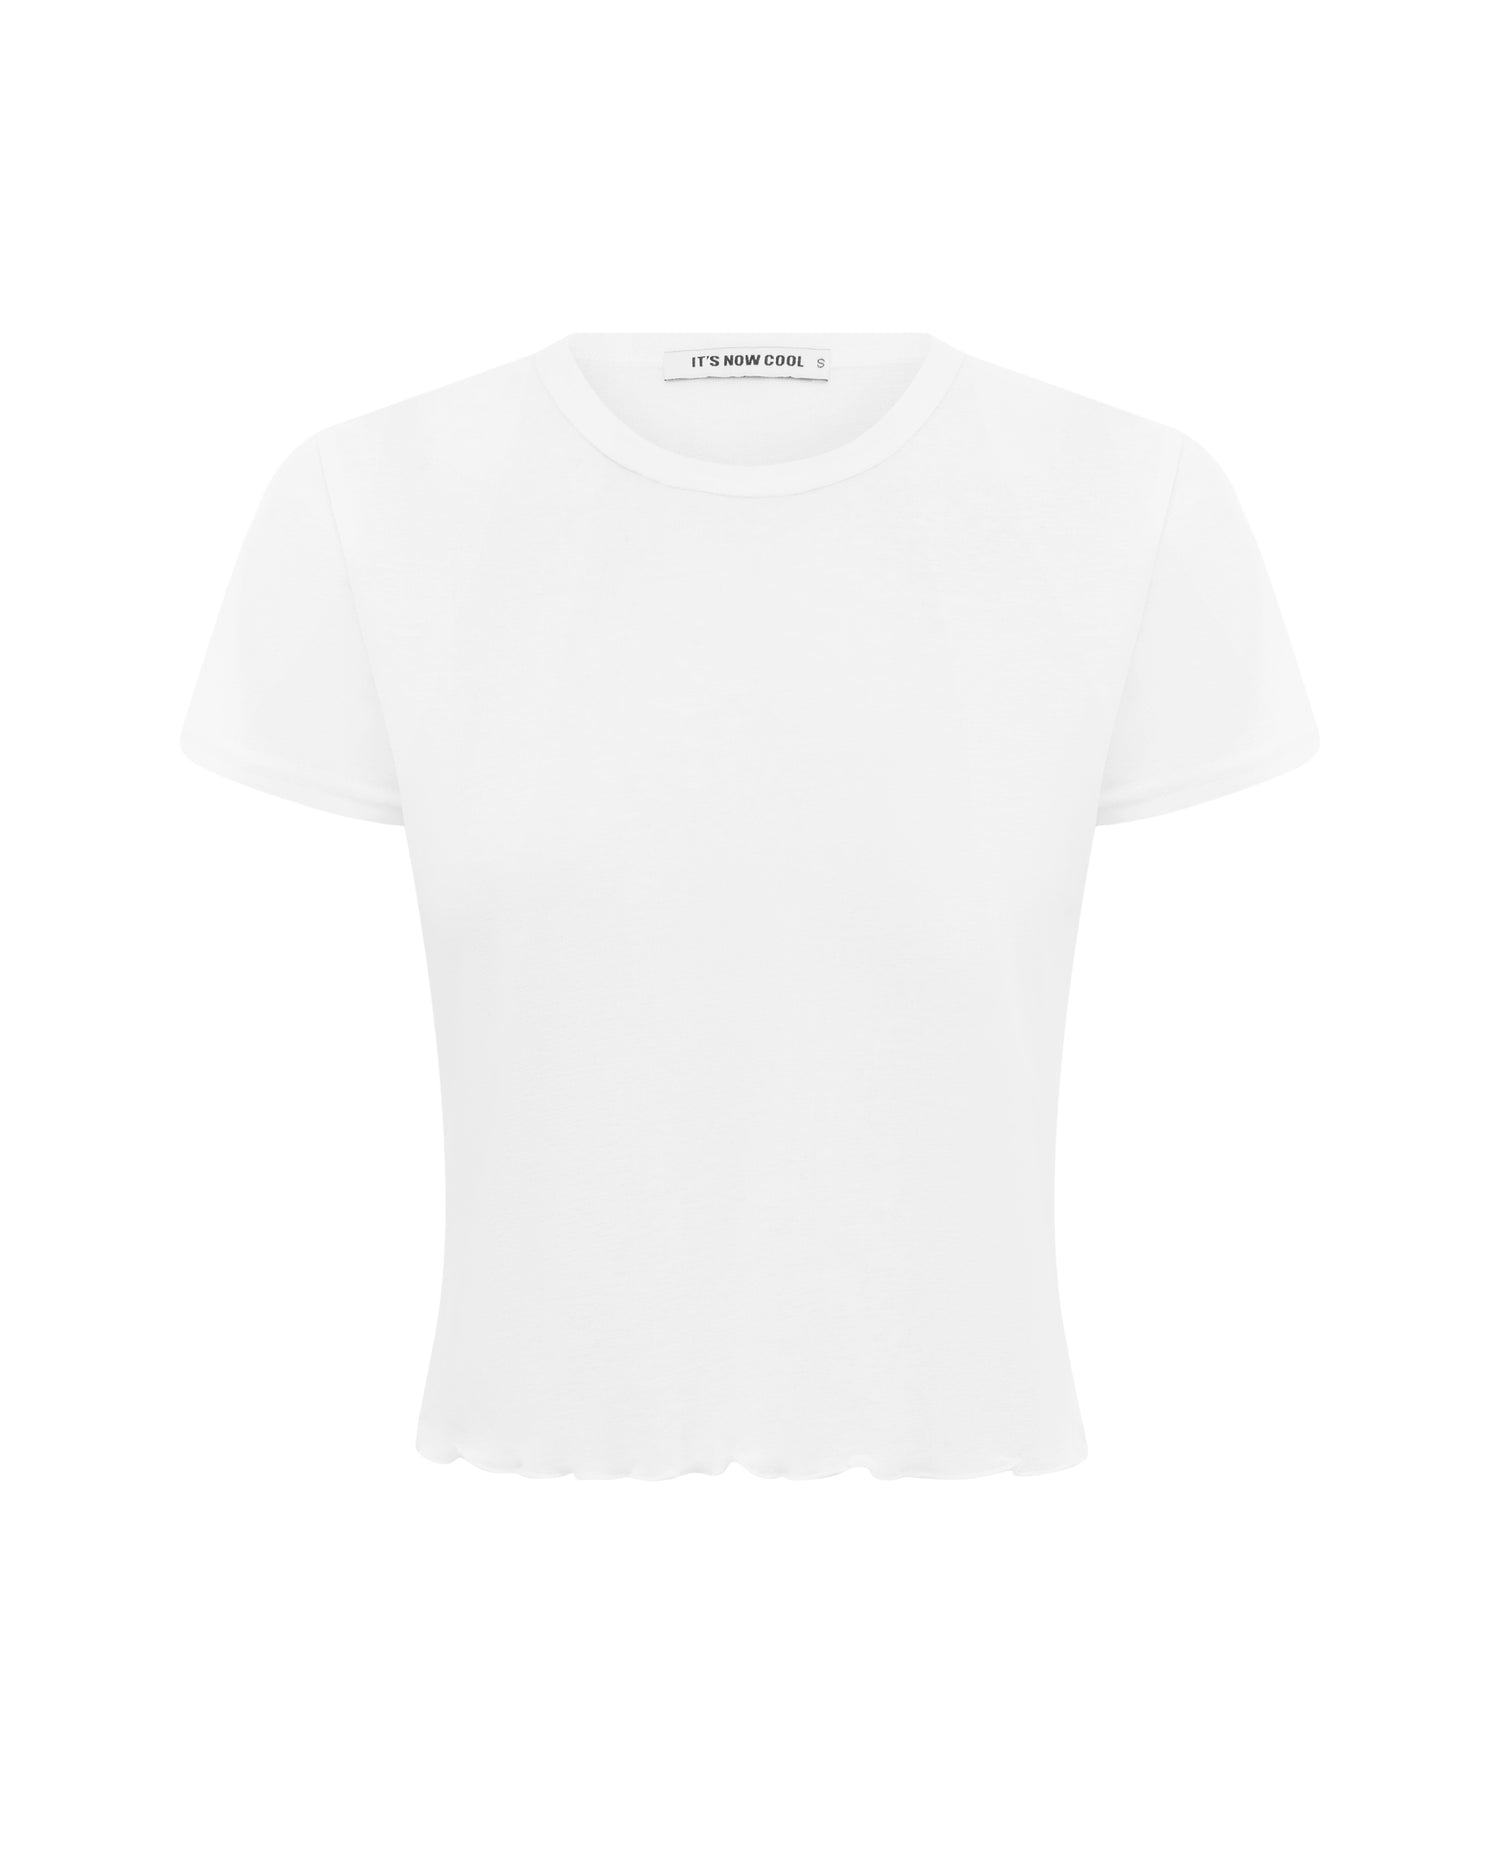 It's Now Cool Beachwear - T-shirt de malha - Branco